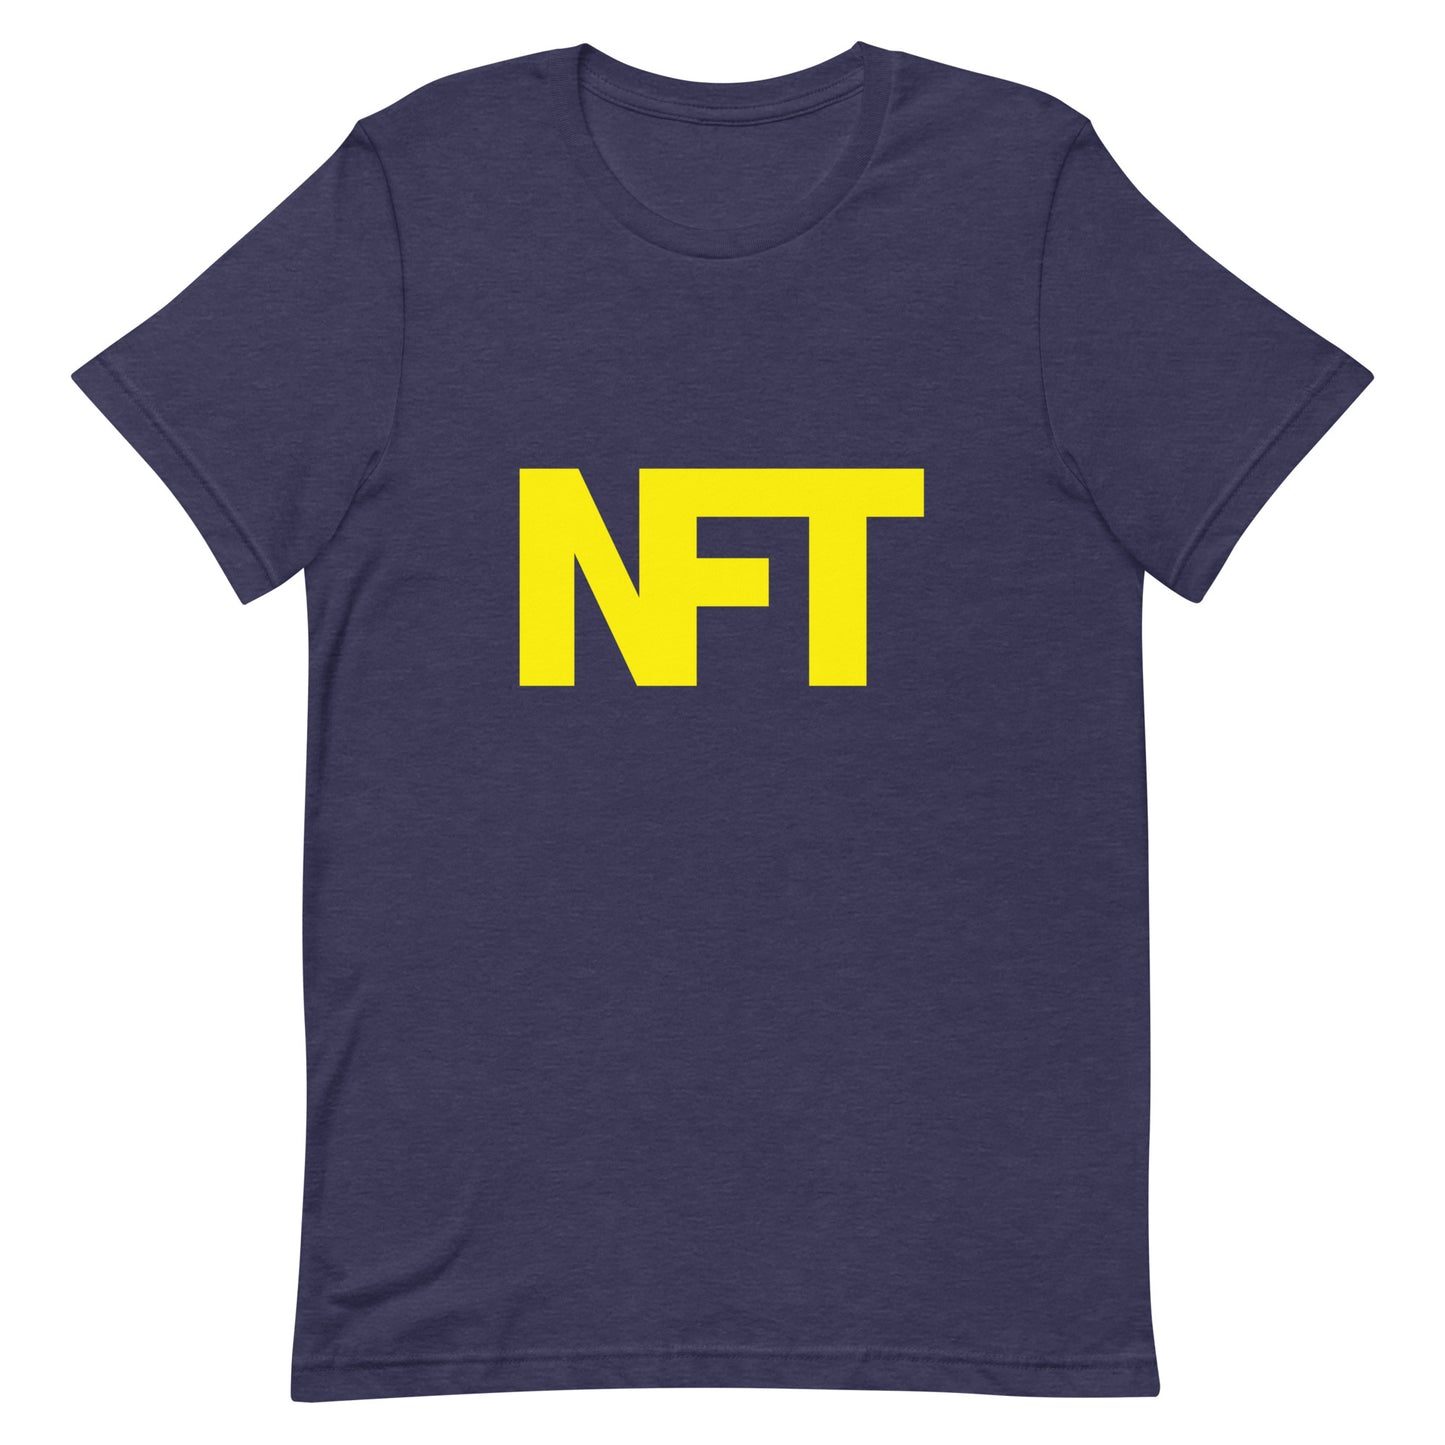 NFT - Sustainably Made Men's Short Sleeve Tee